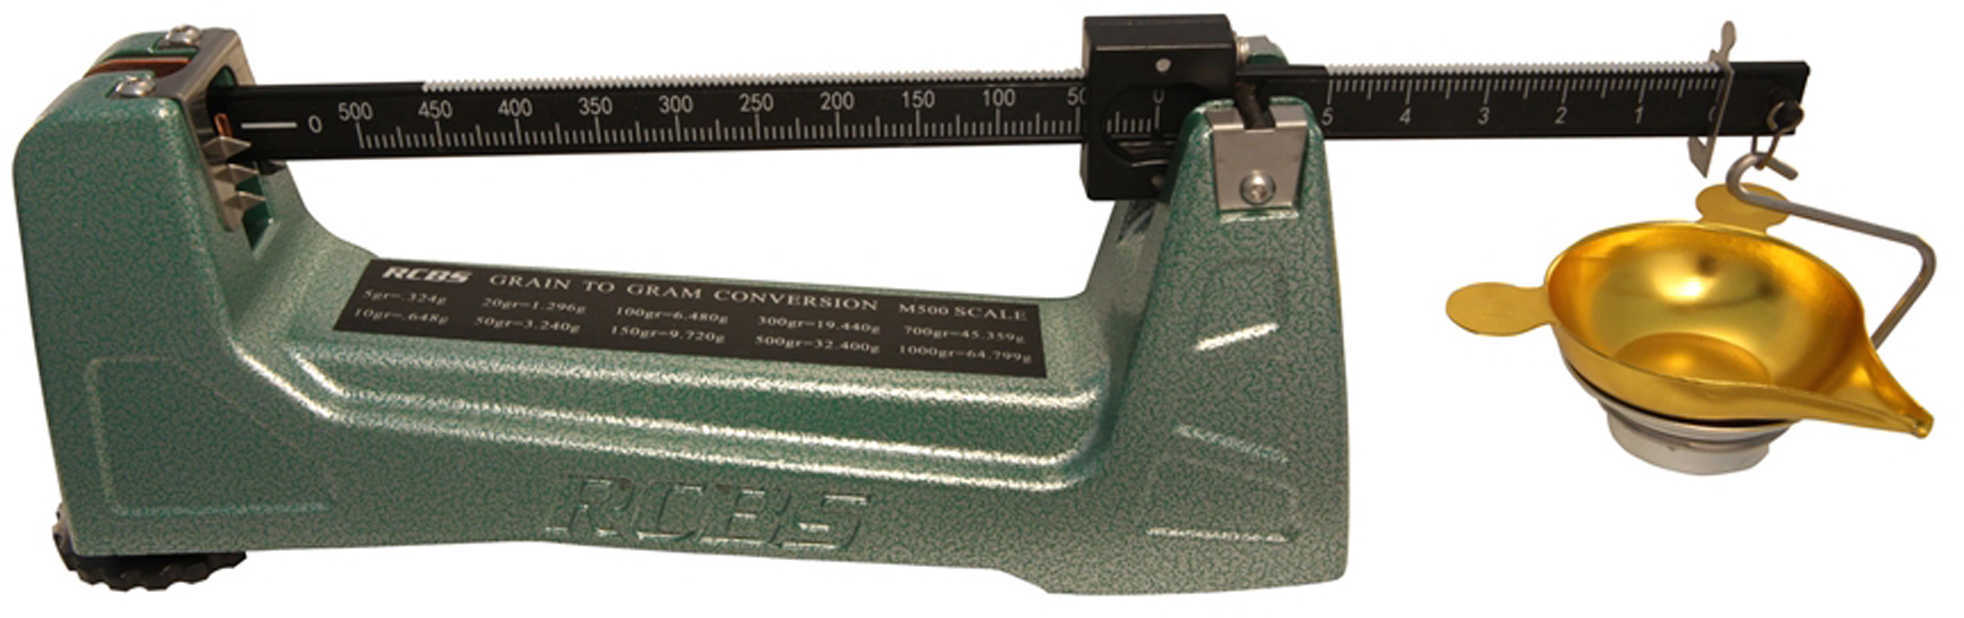 RCBS M500 Mechanical Scale